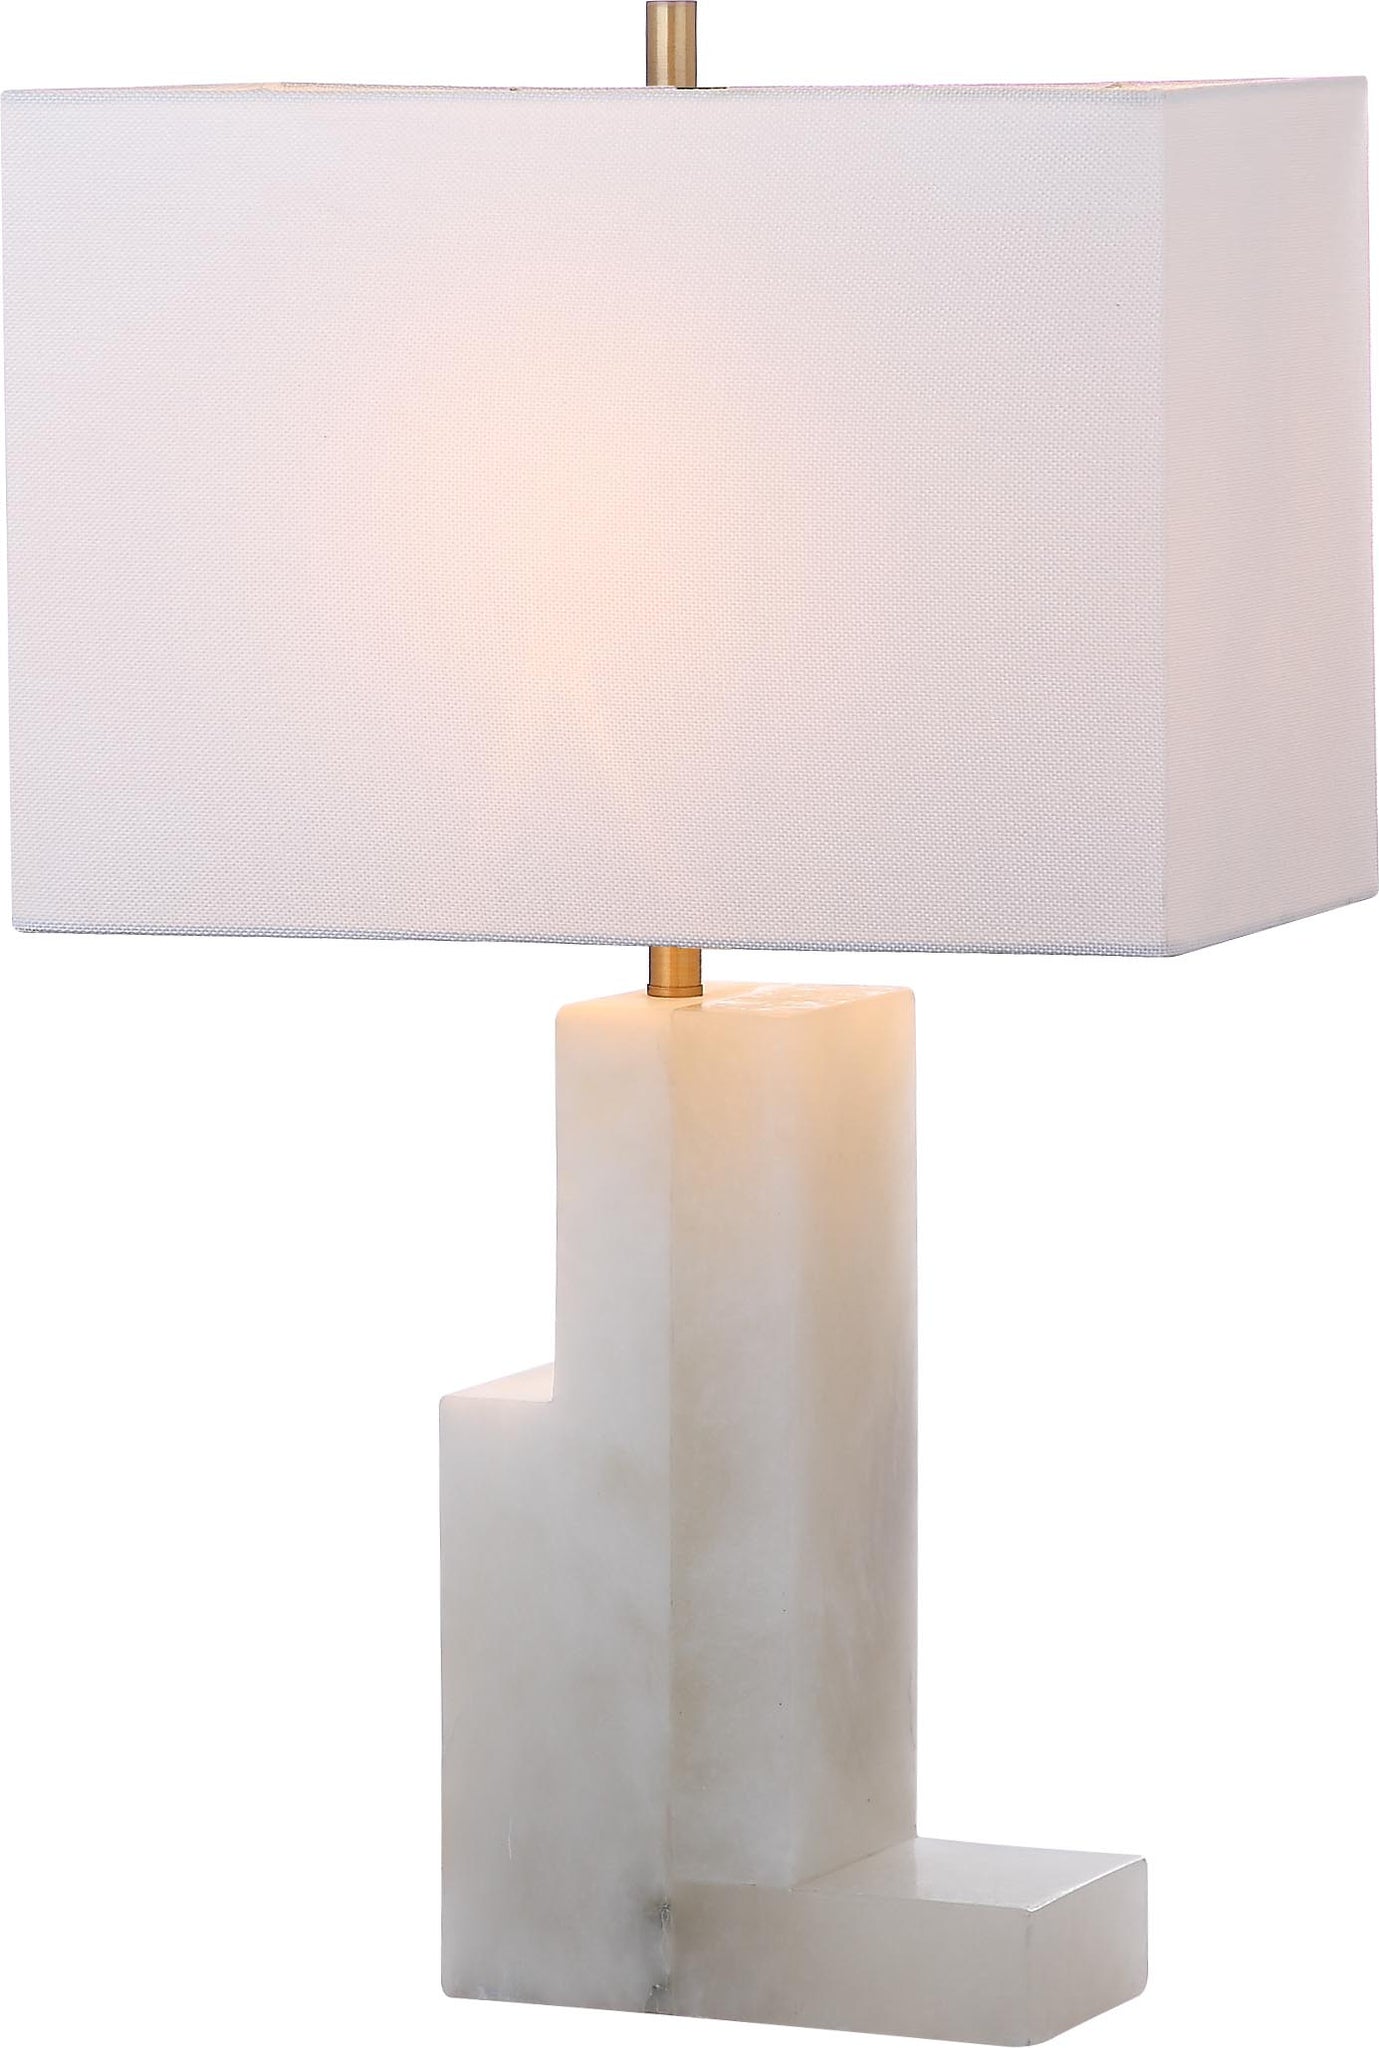 Safavieh Cora Alabaster 2775-Inch H Table Lamp White main image